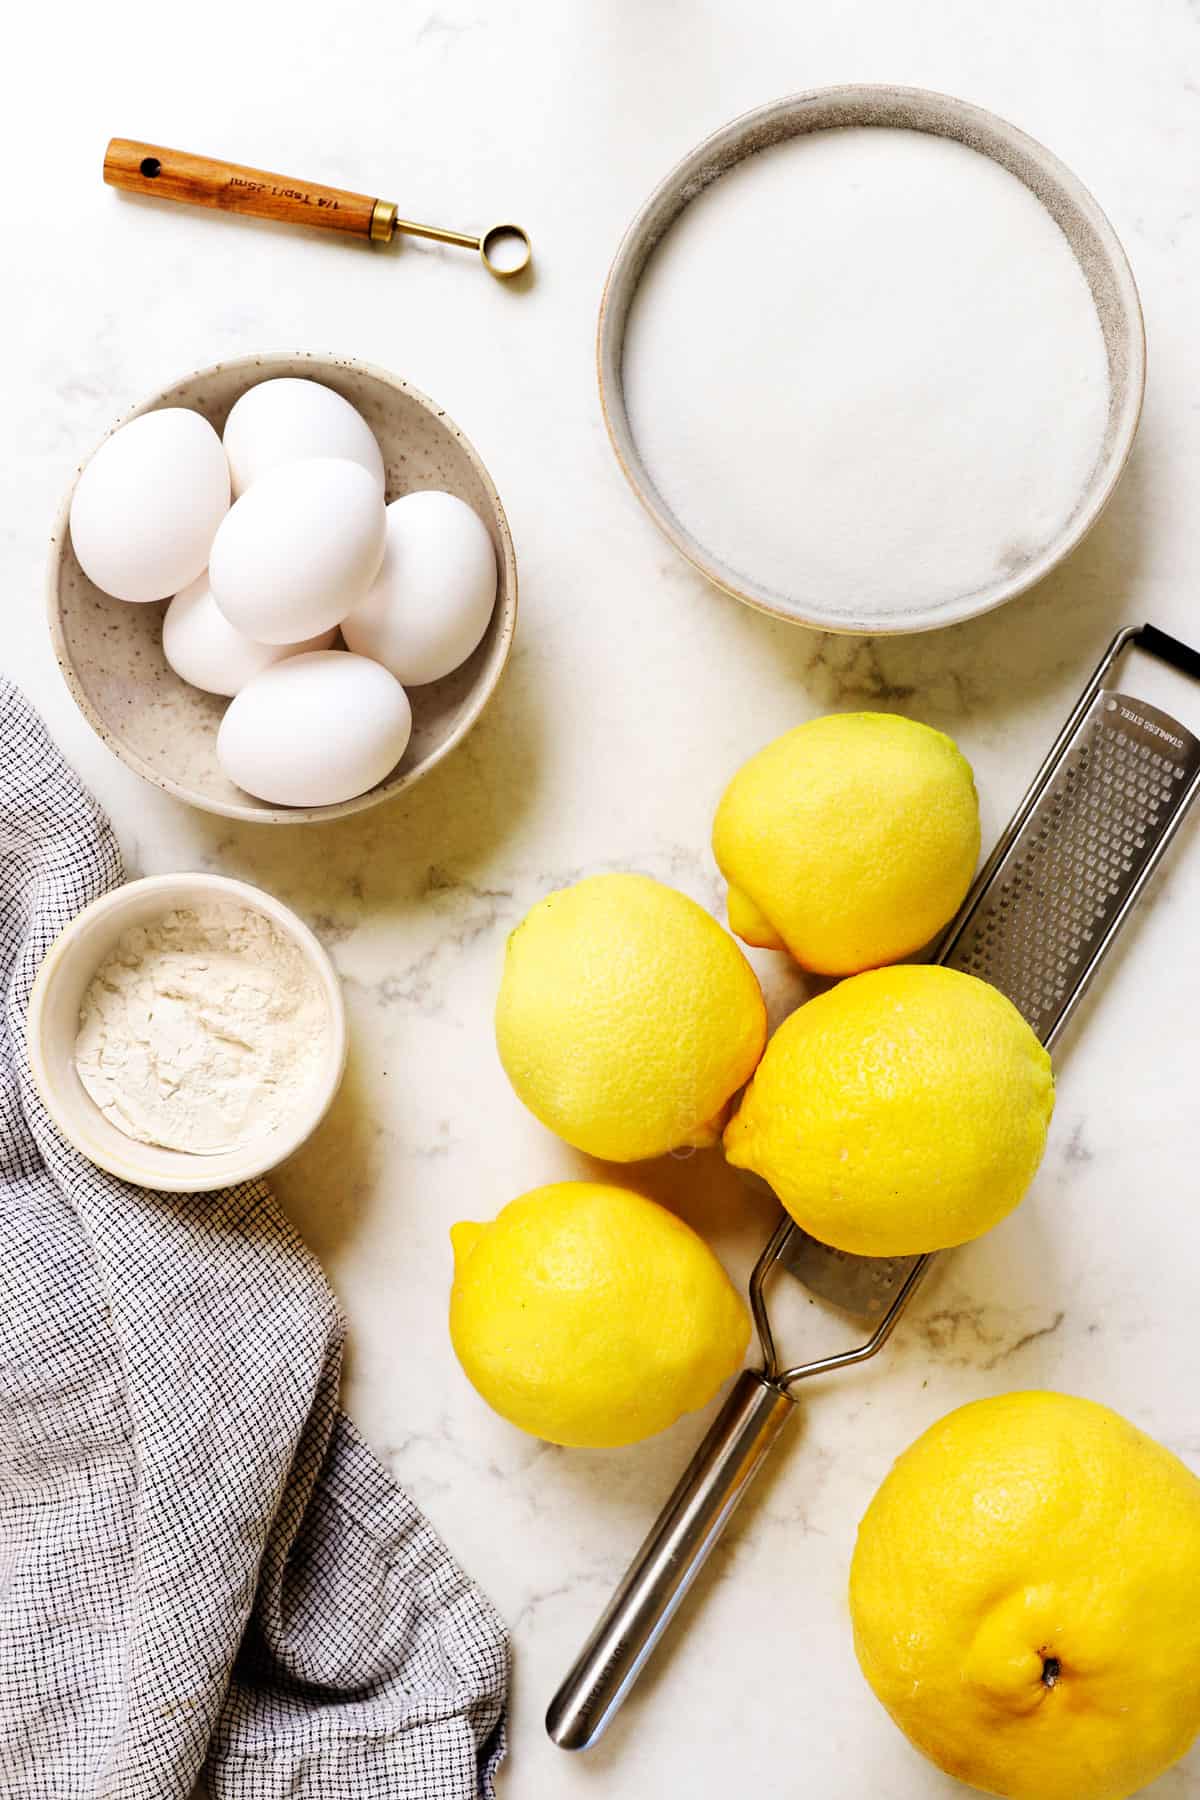 showing the ingredients for lemon bars recipe:  eggs, sugar, flour and lemons